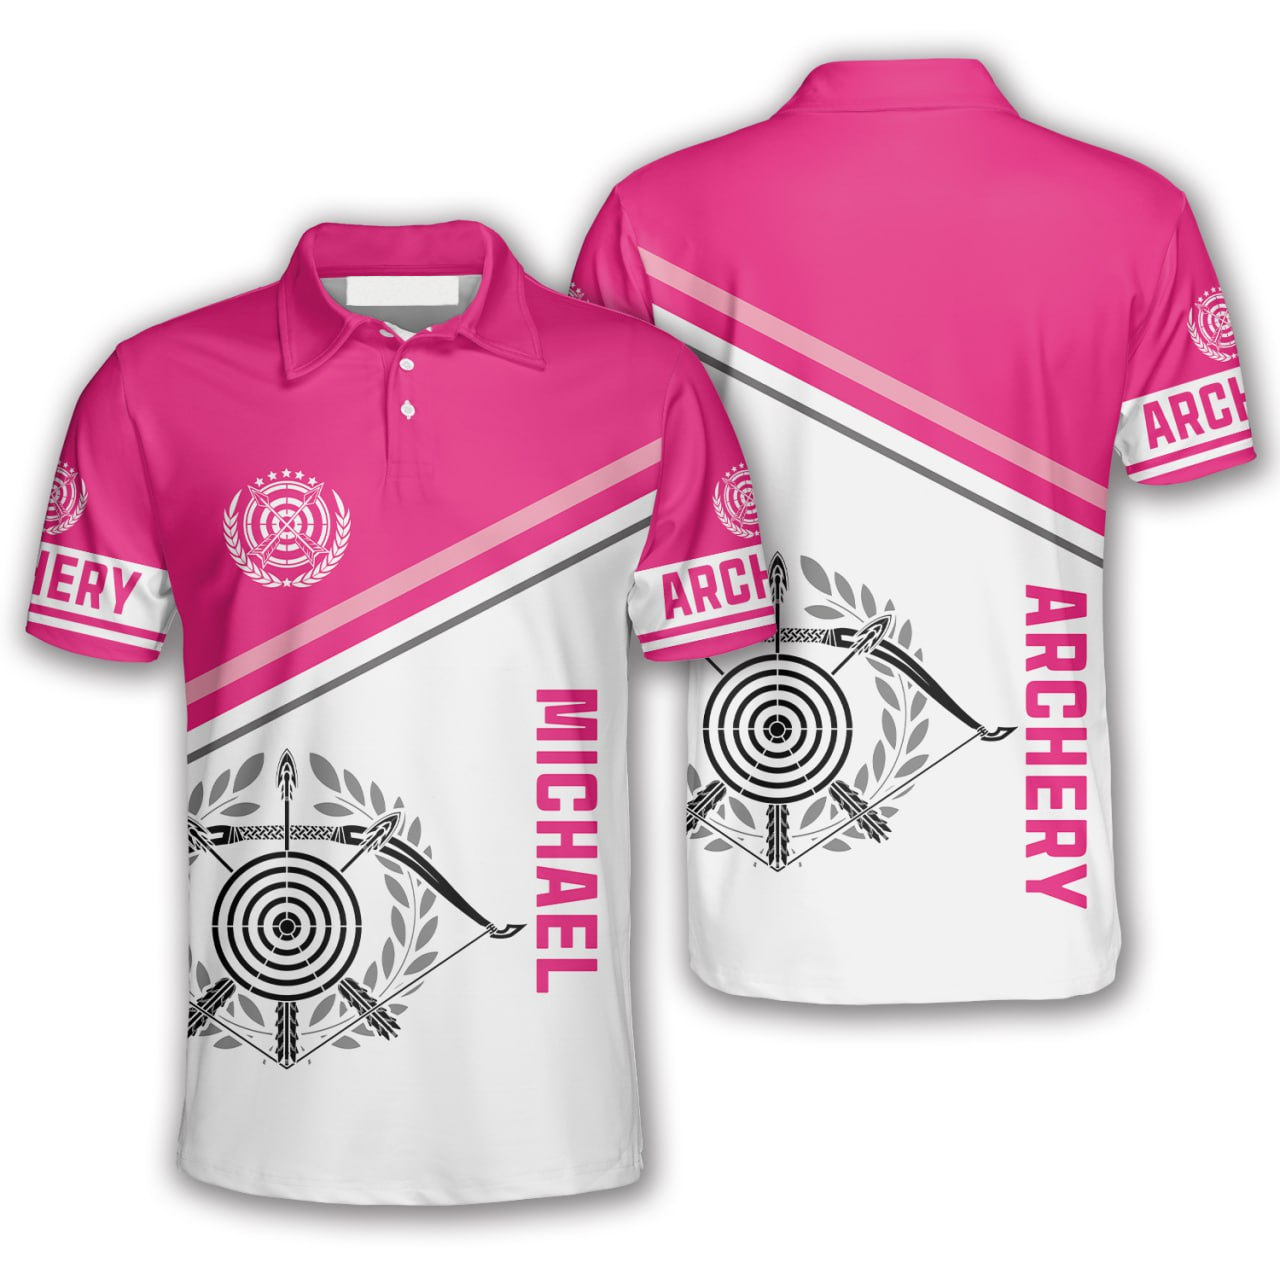 Archery Emblem Pink Version Custom Archery Shirts for Men Women/ Best Gift for Archery Lover